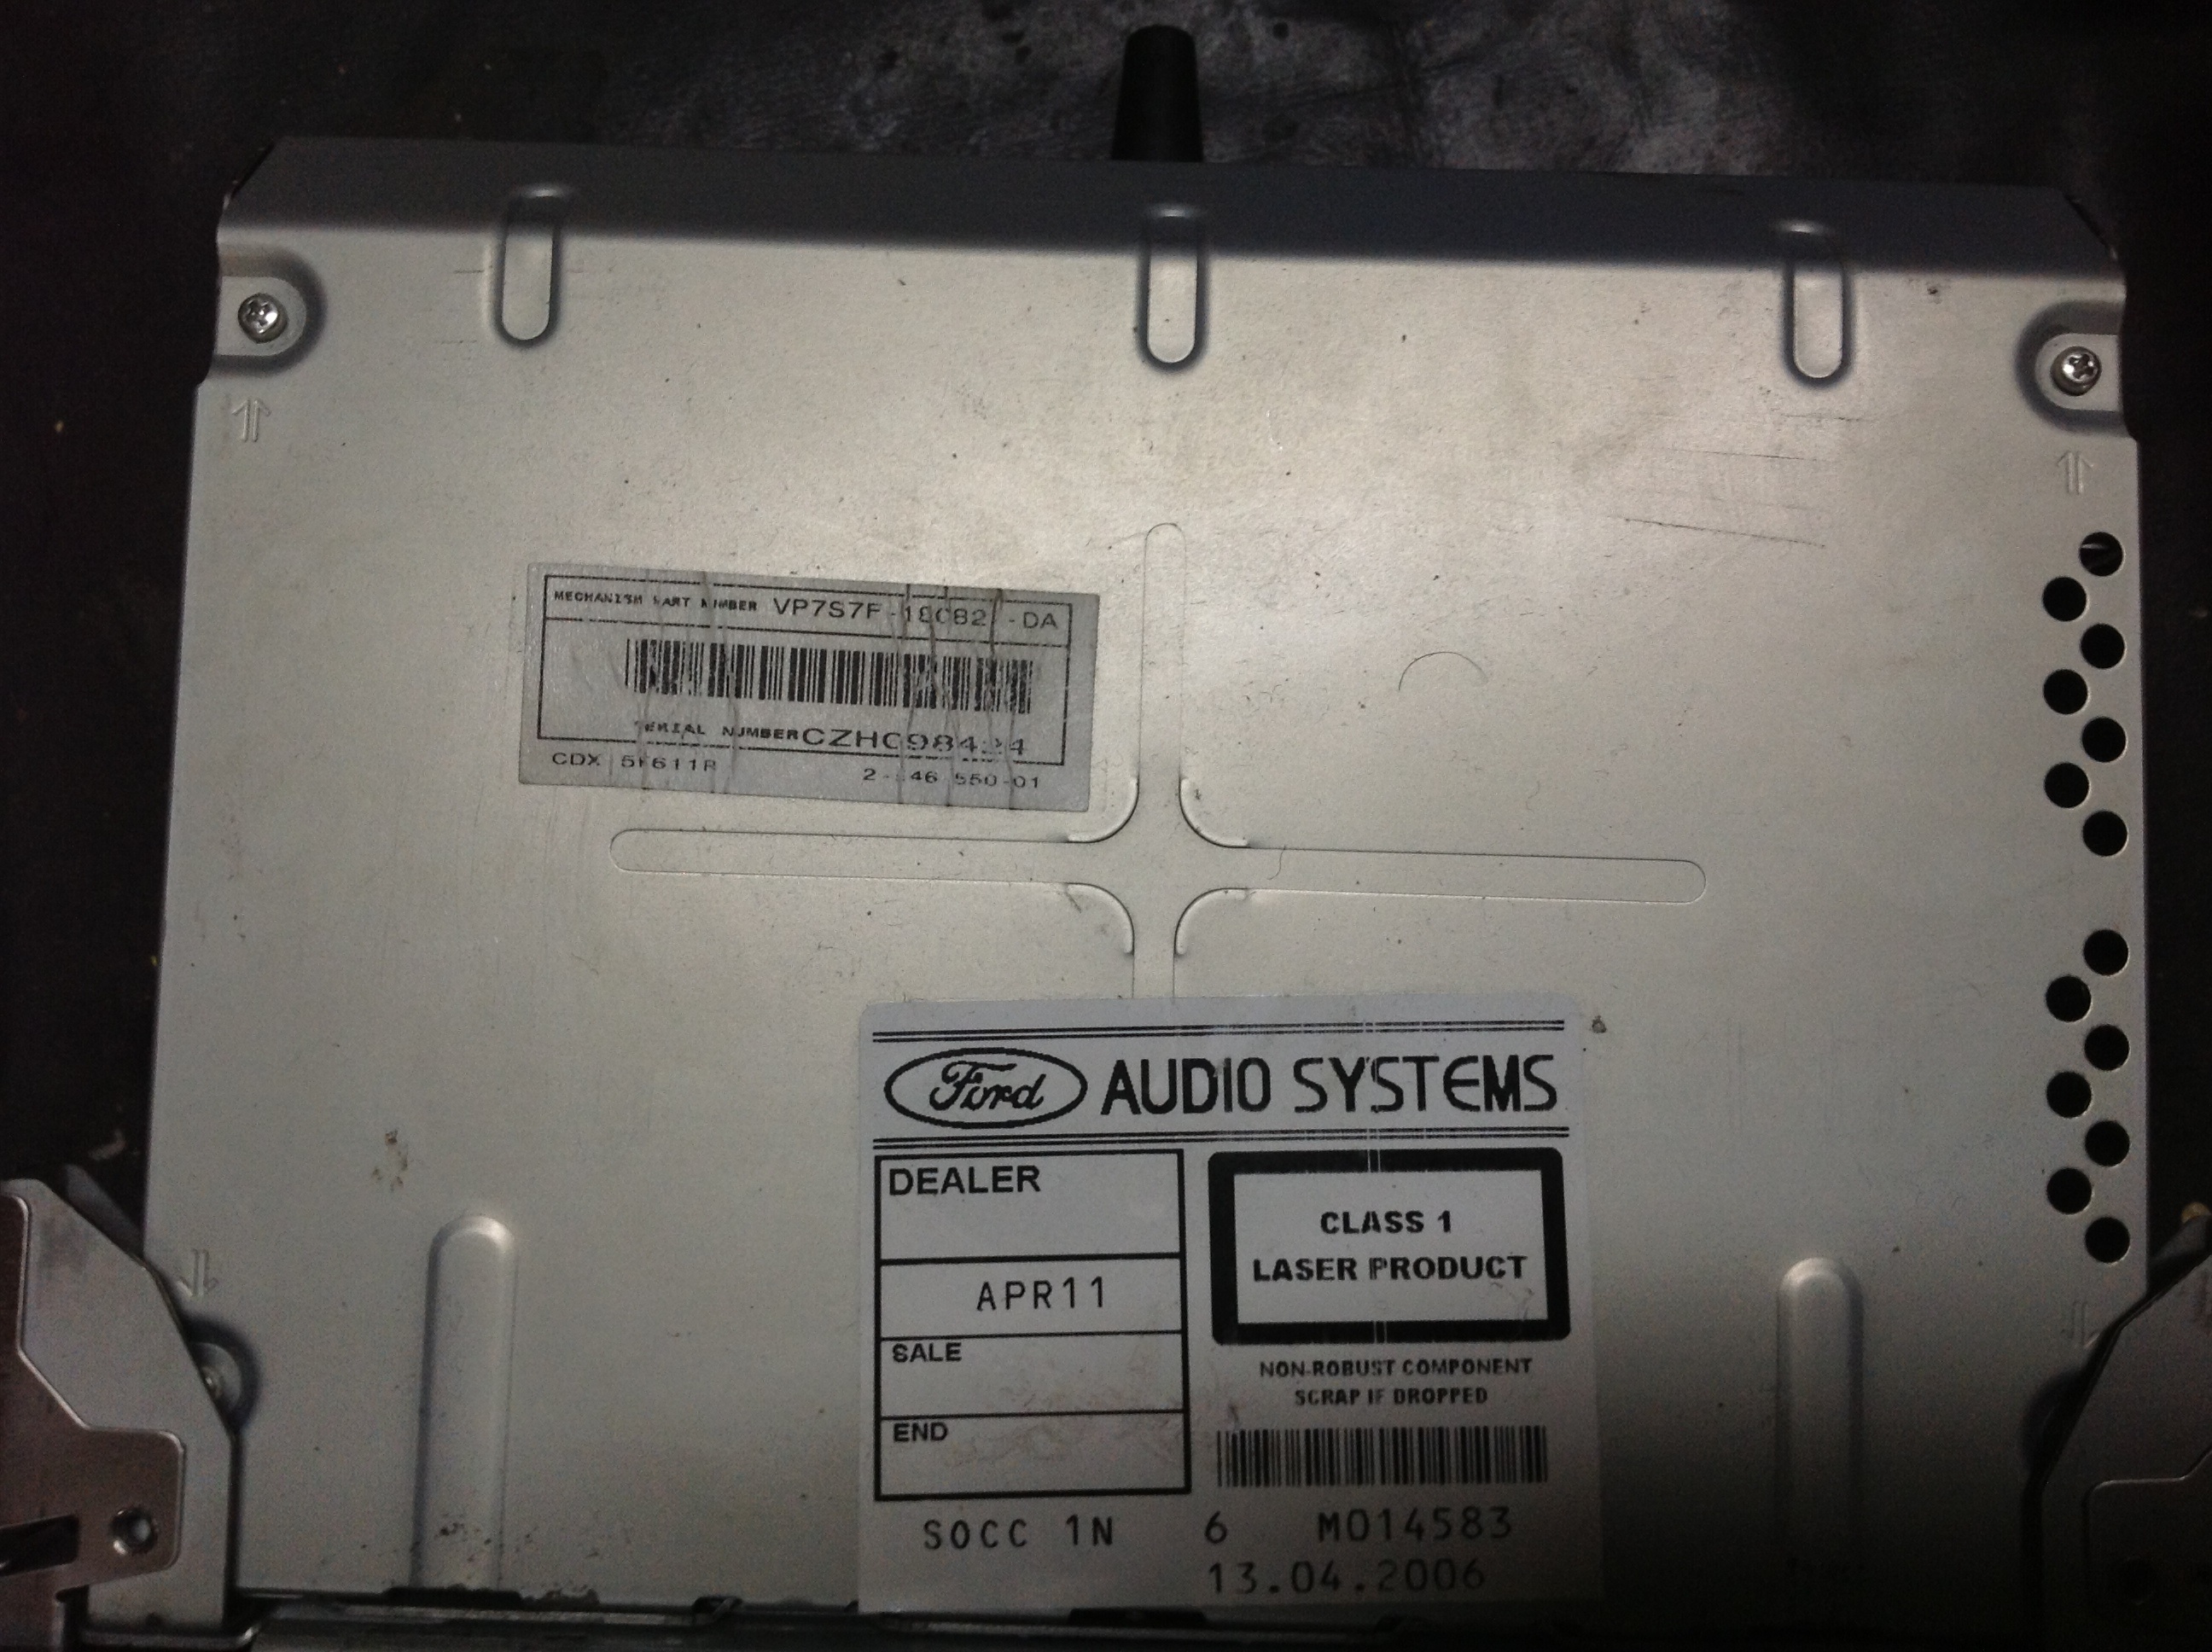 Sony Cdx-5F611R Plise radio code Serial no CZHC98424